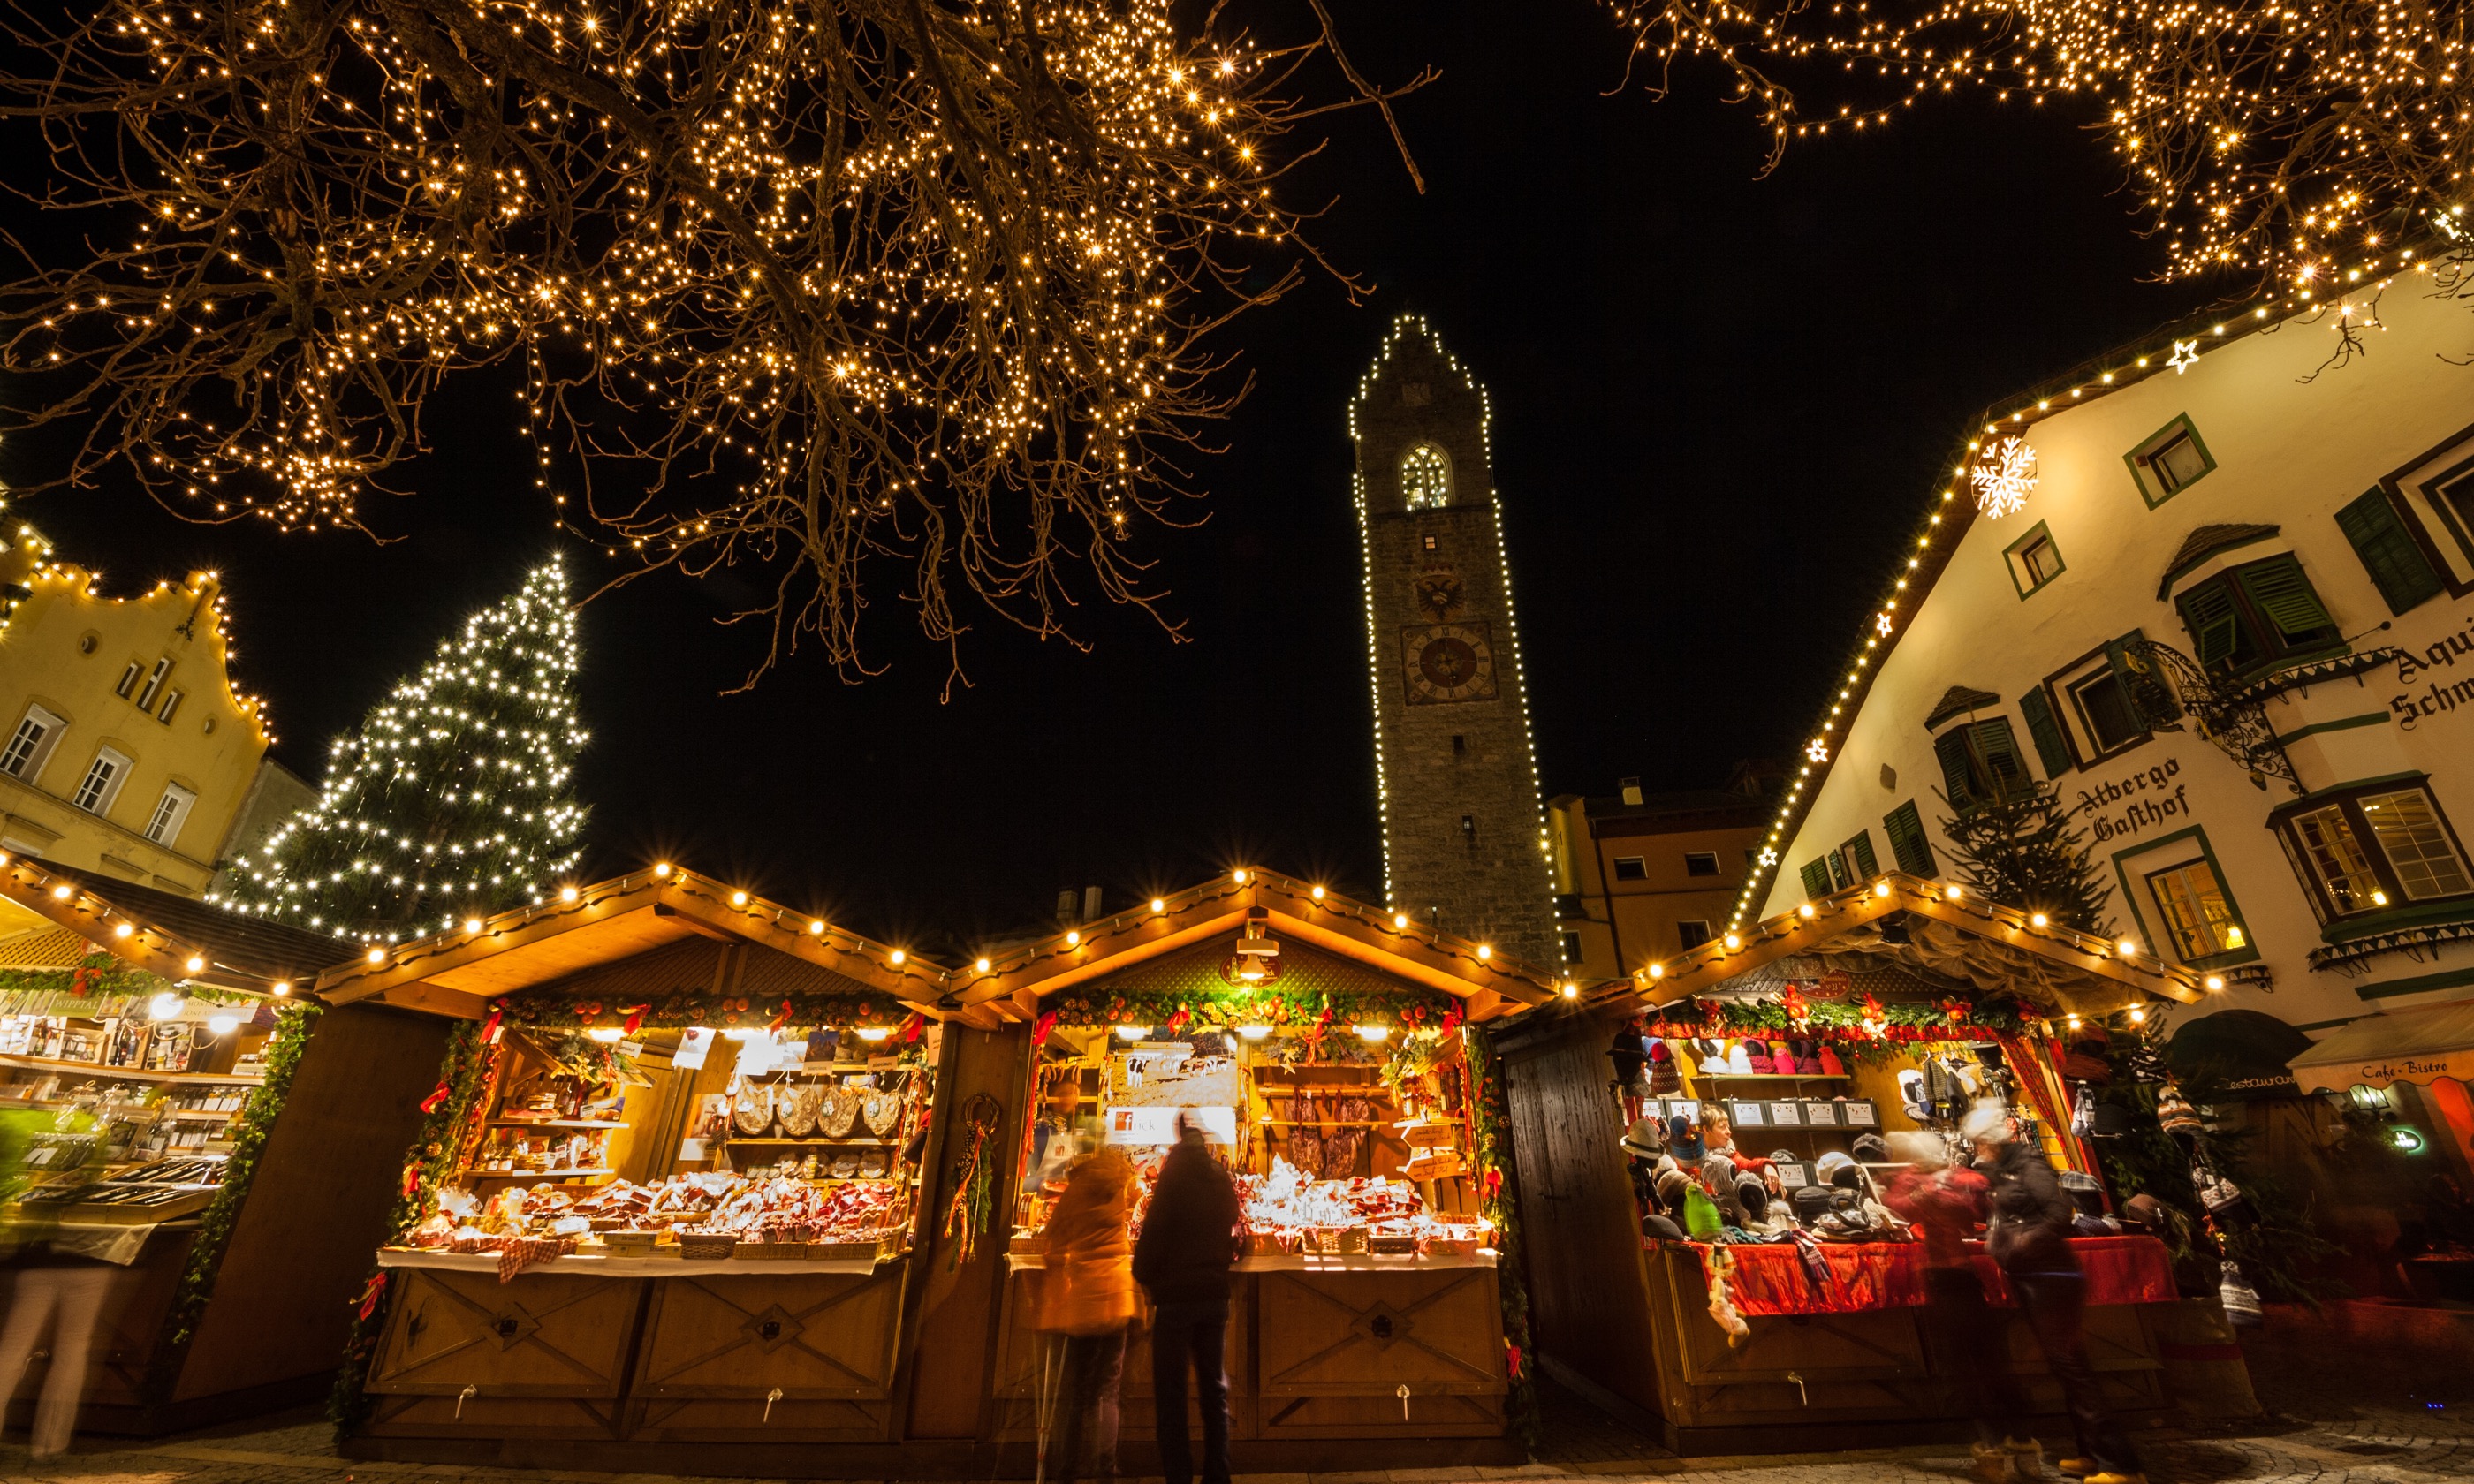 Main image: Christmas Market, Bolzano (Shutterstock.com. See main credit below)